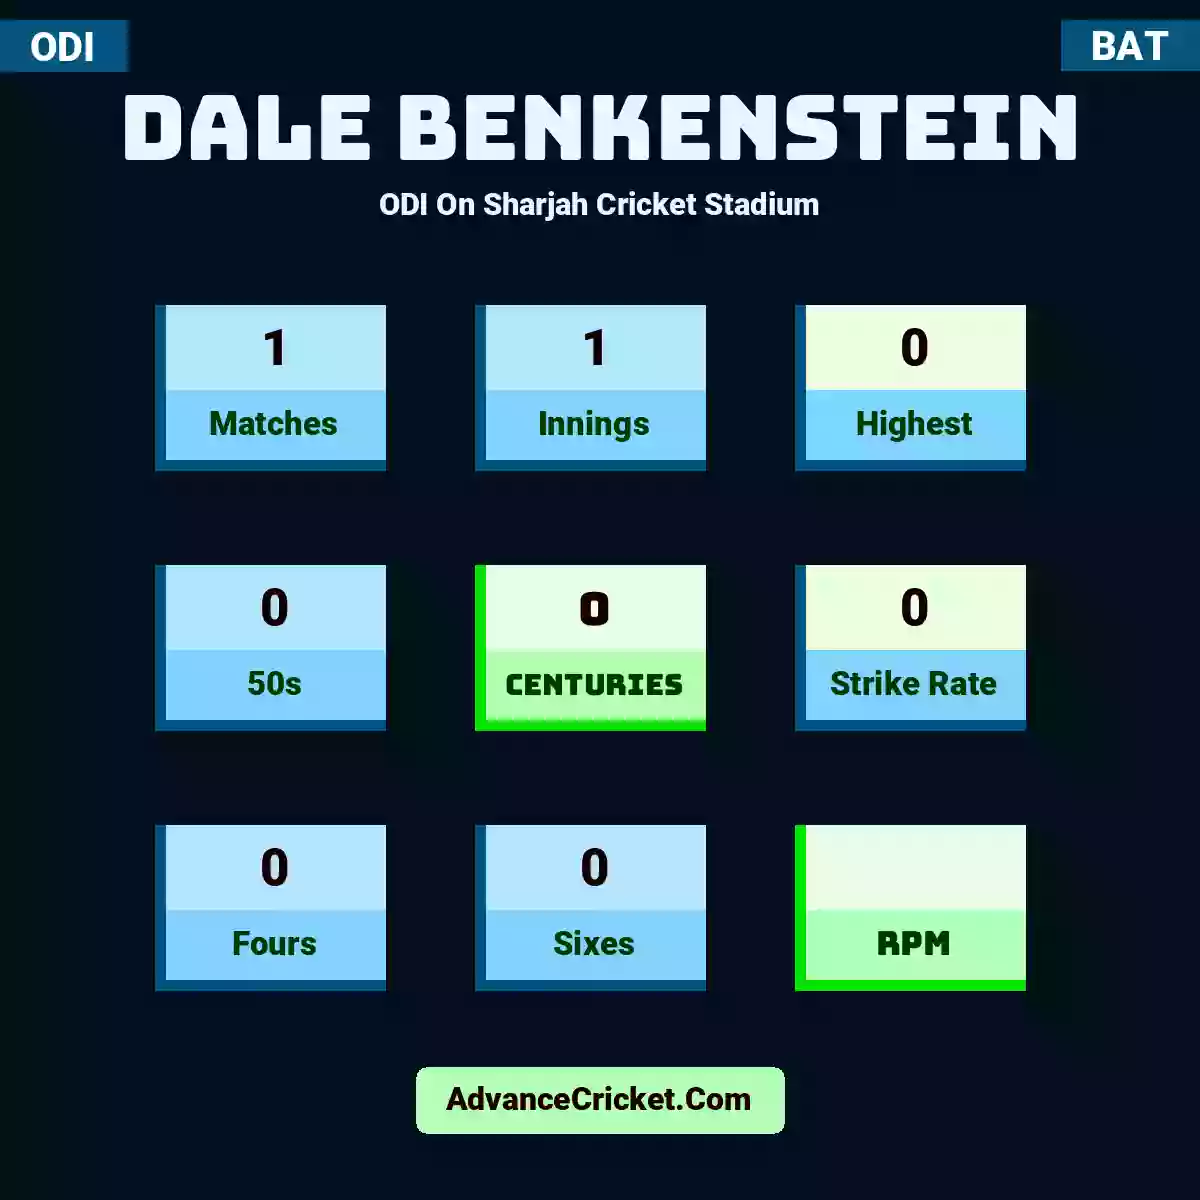 Dale Benkenstein ODI  On Sharjah Cricket Stadium, Dale Benkenstein played 1 matches, scored 0 runs as highest, 0 half-centuries, and 0 centuries, with a strike rate of 0. D.Benkenstein hit 0 fours and 0 sixes.